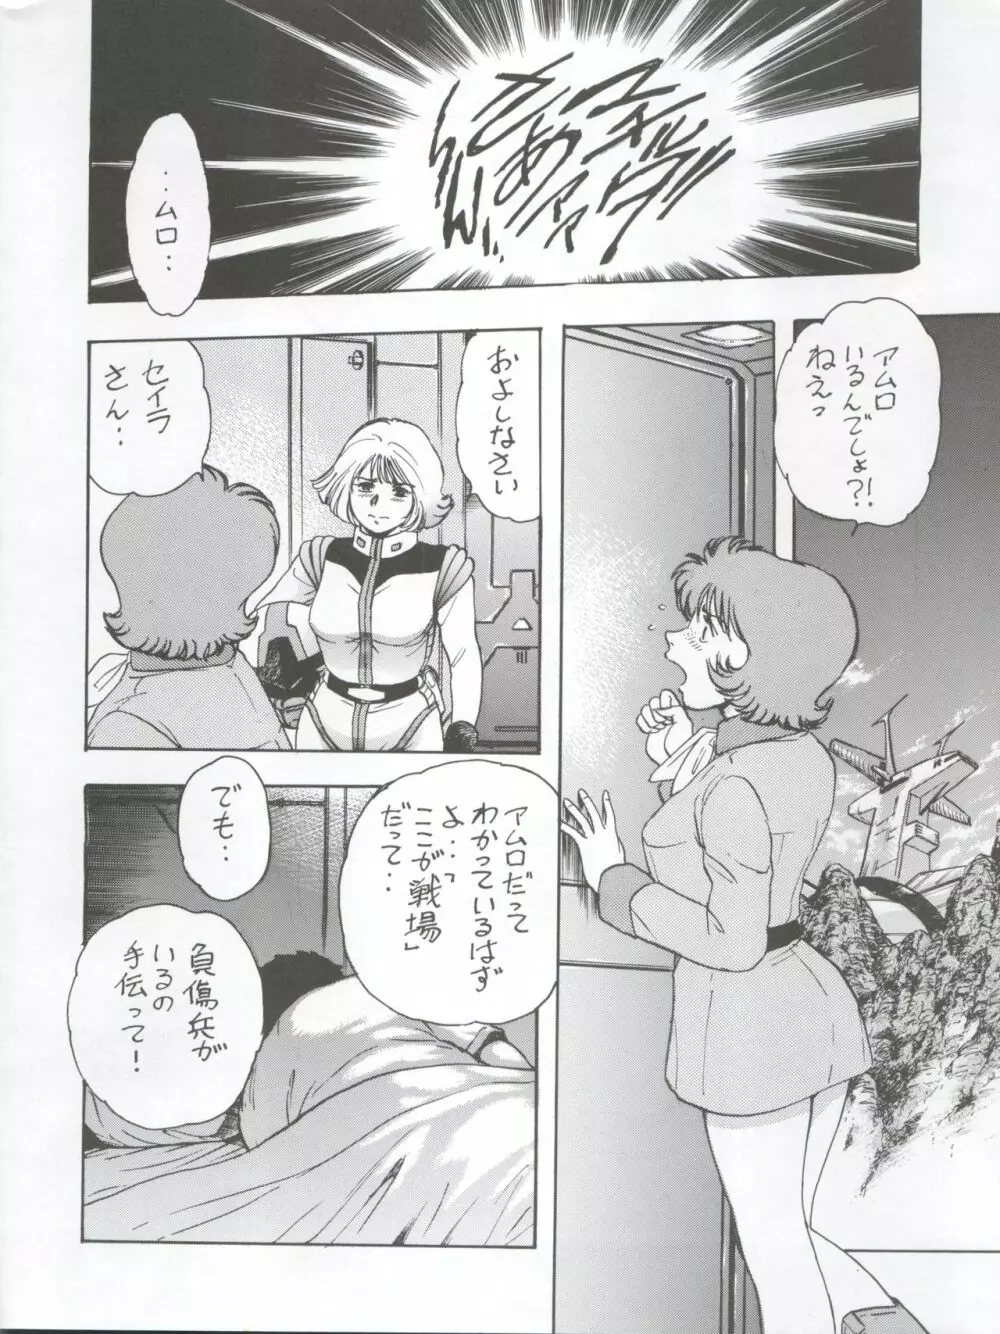 NEXT Climax Magazine 3 Gundam Series - page8